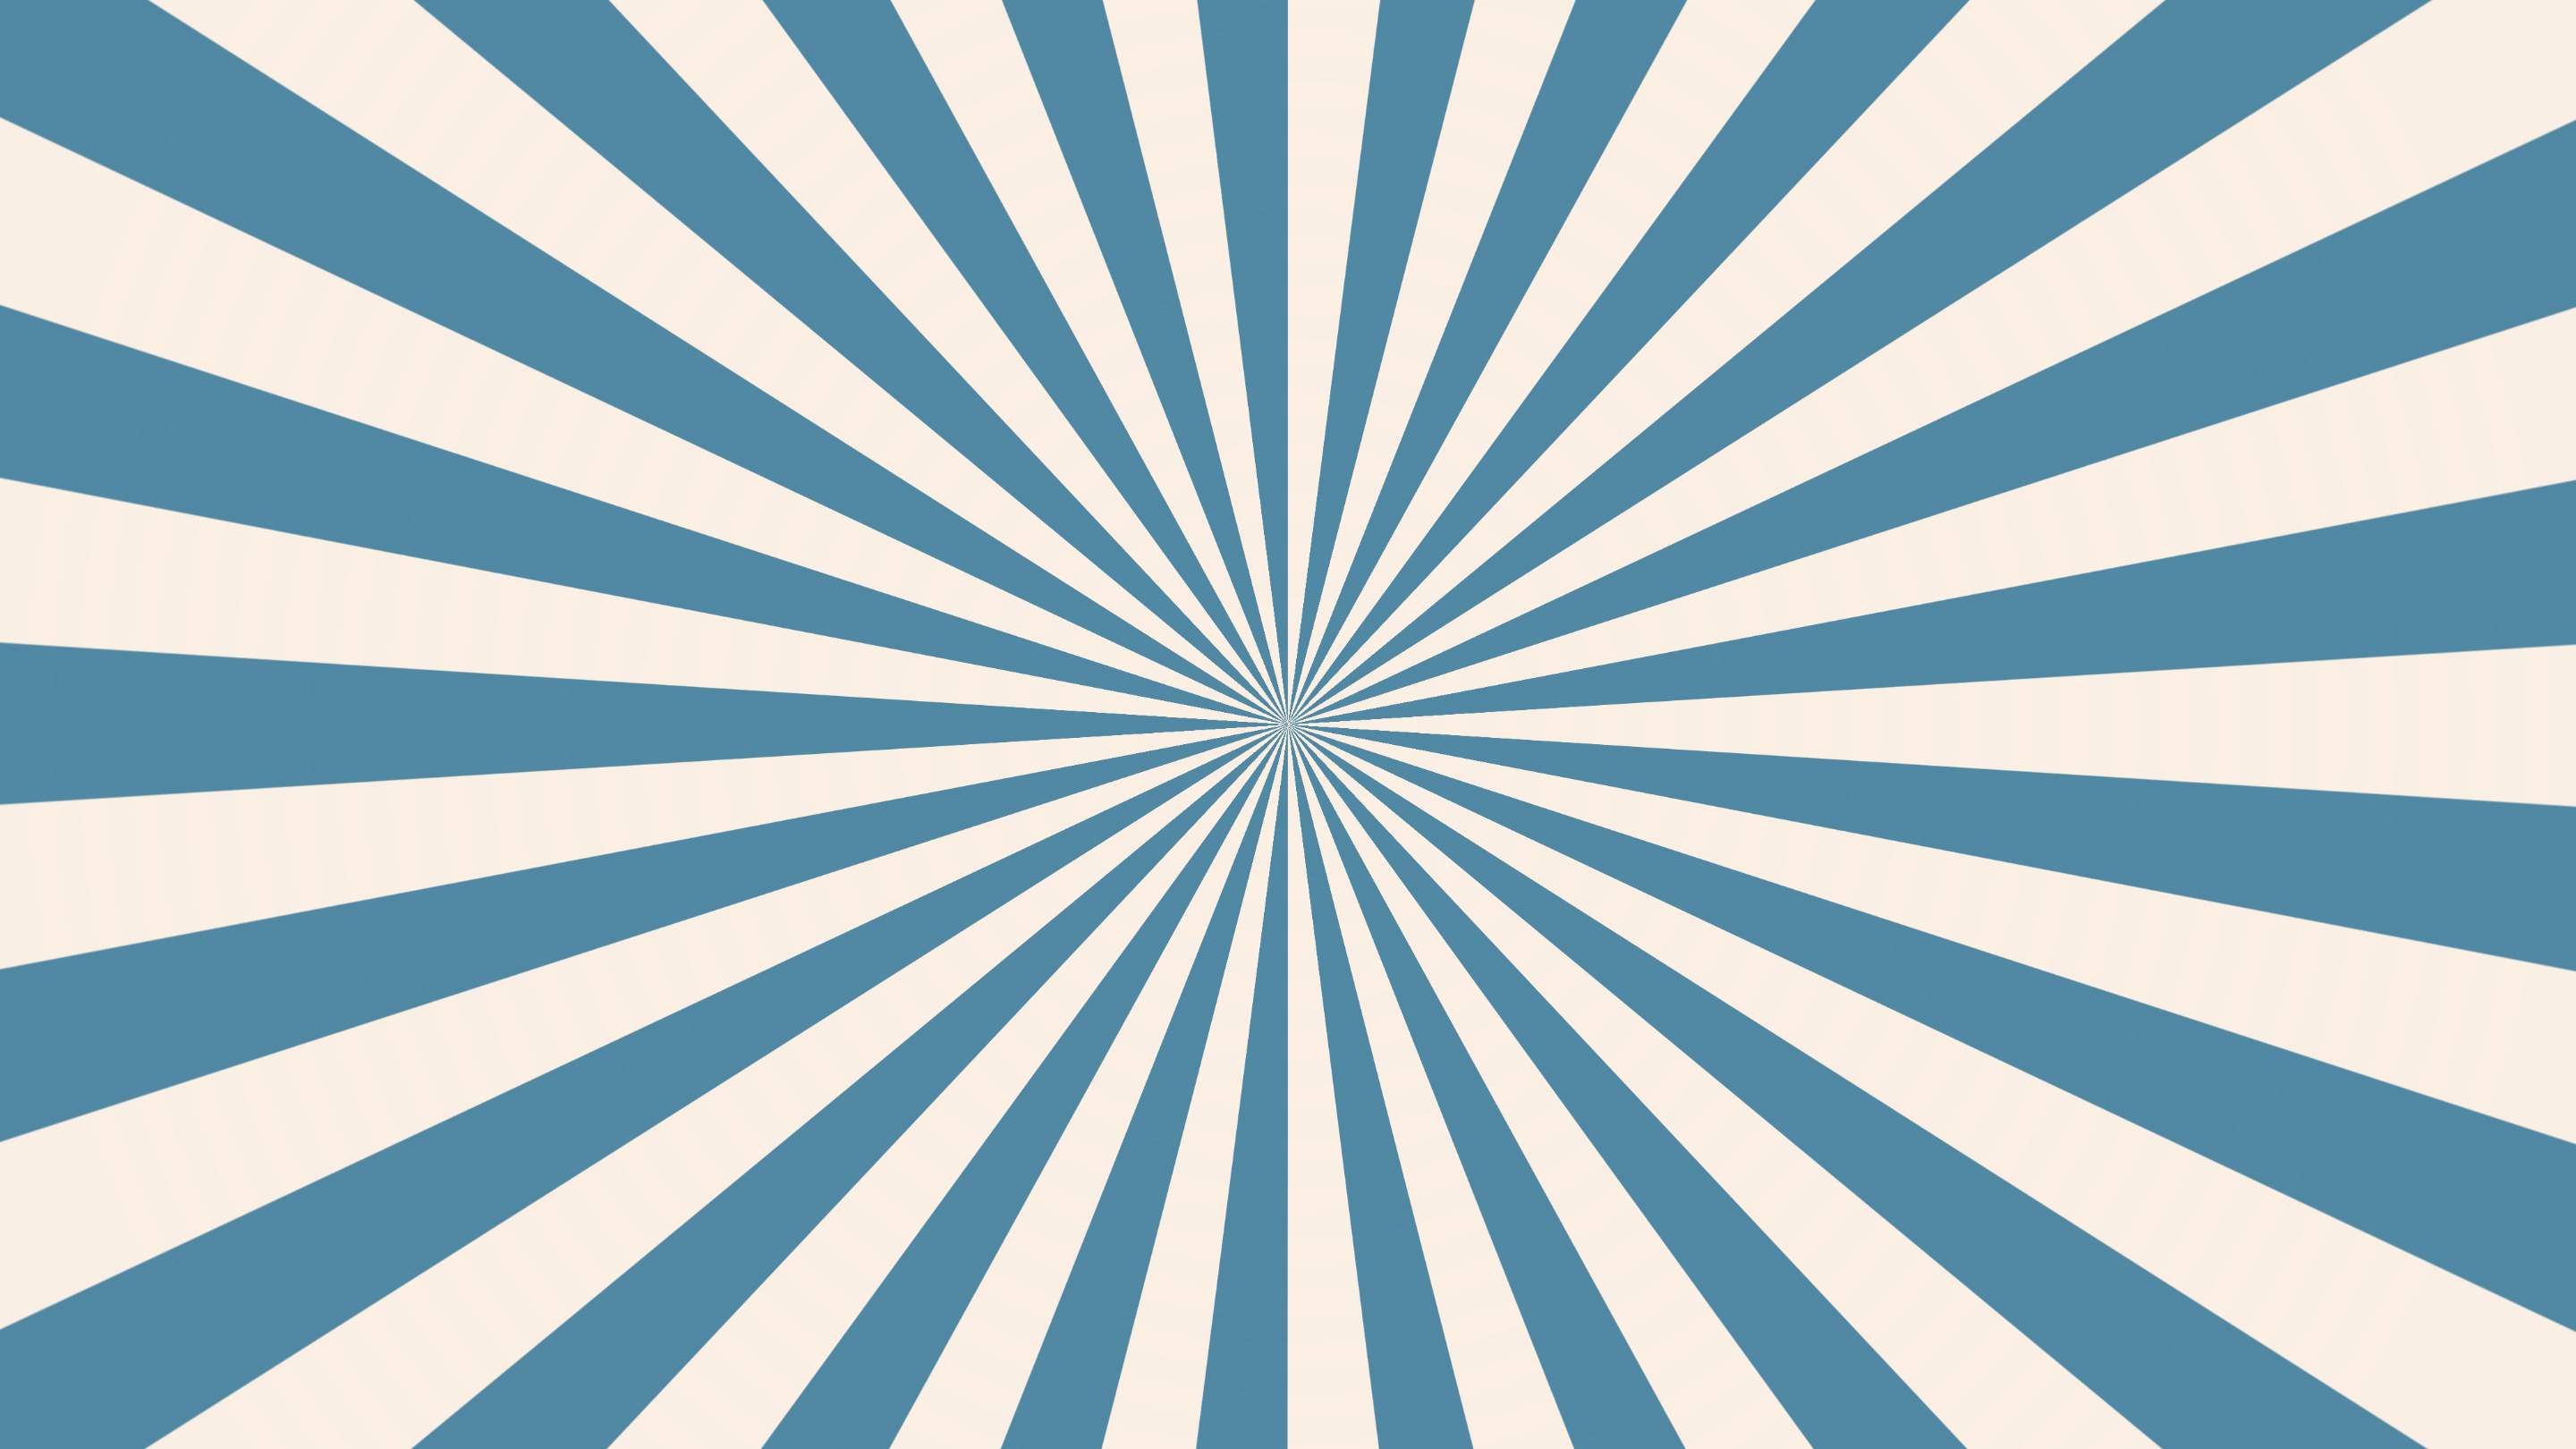 Hypnotic illustration with light blue lines.